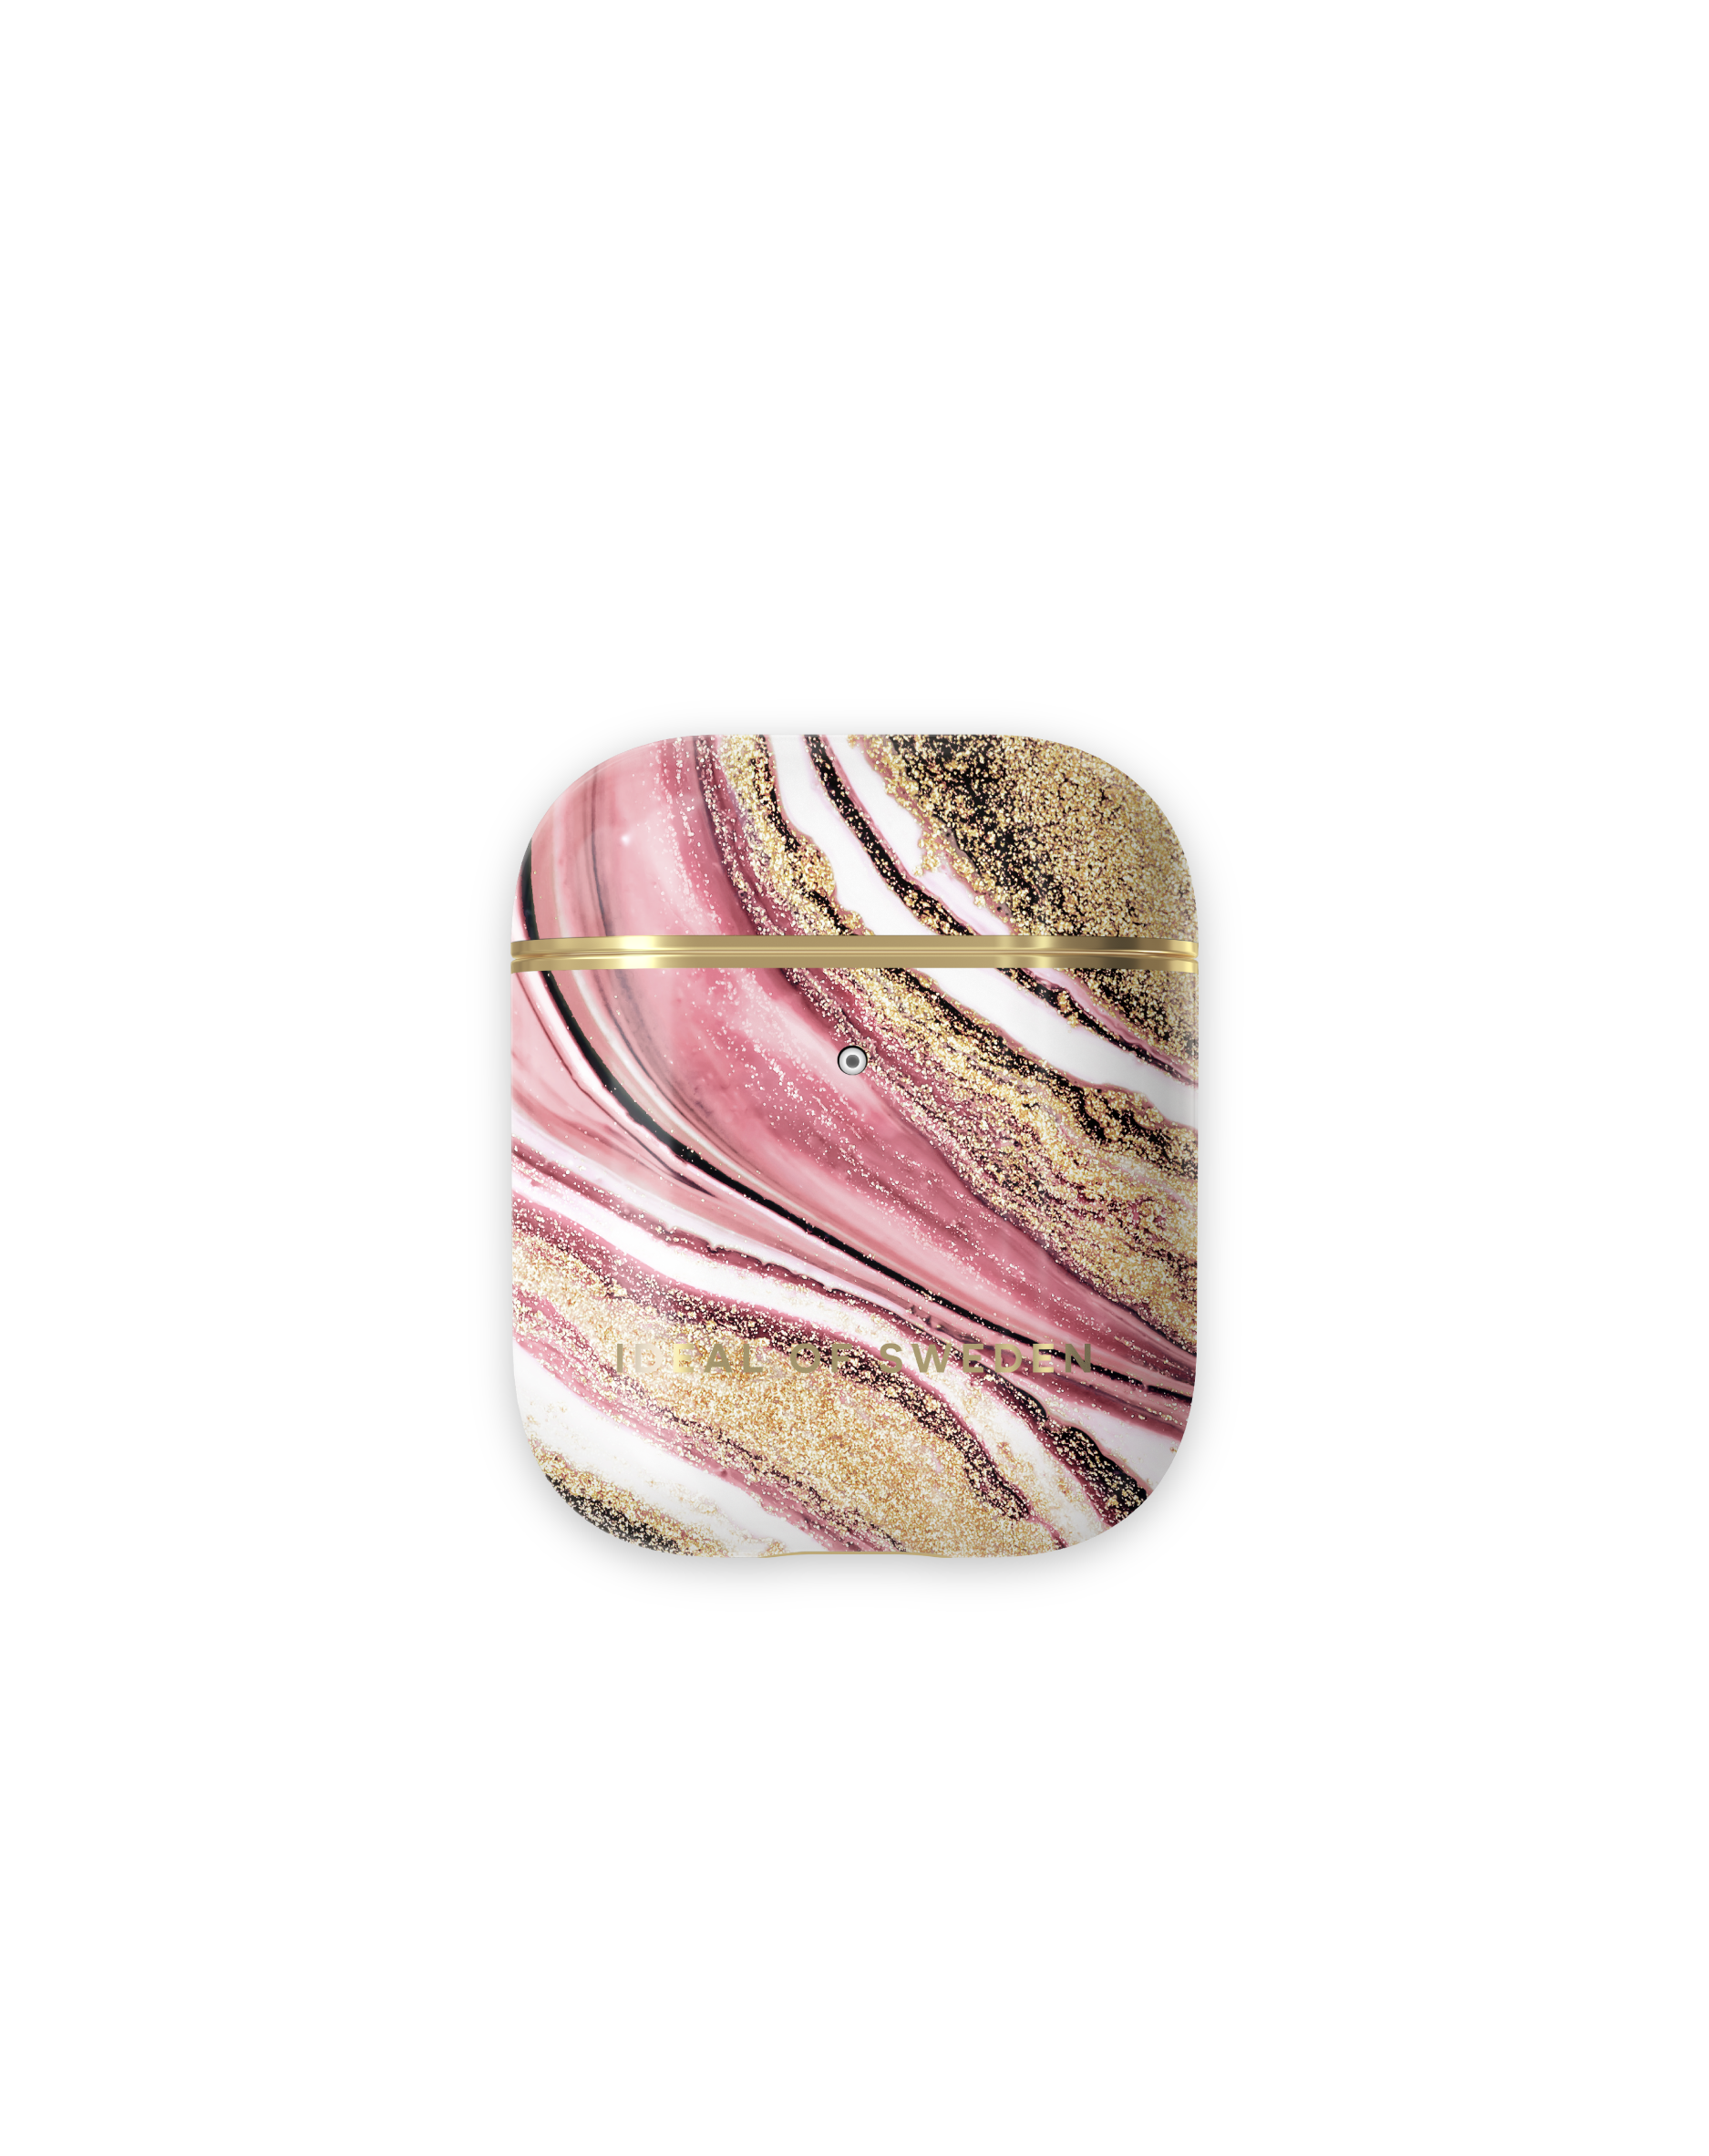 für: IDEAL Cover Pink Cosmic Swirl IDFAPC-193 Apple AirPod Case OF Full passend SWEDEN